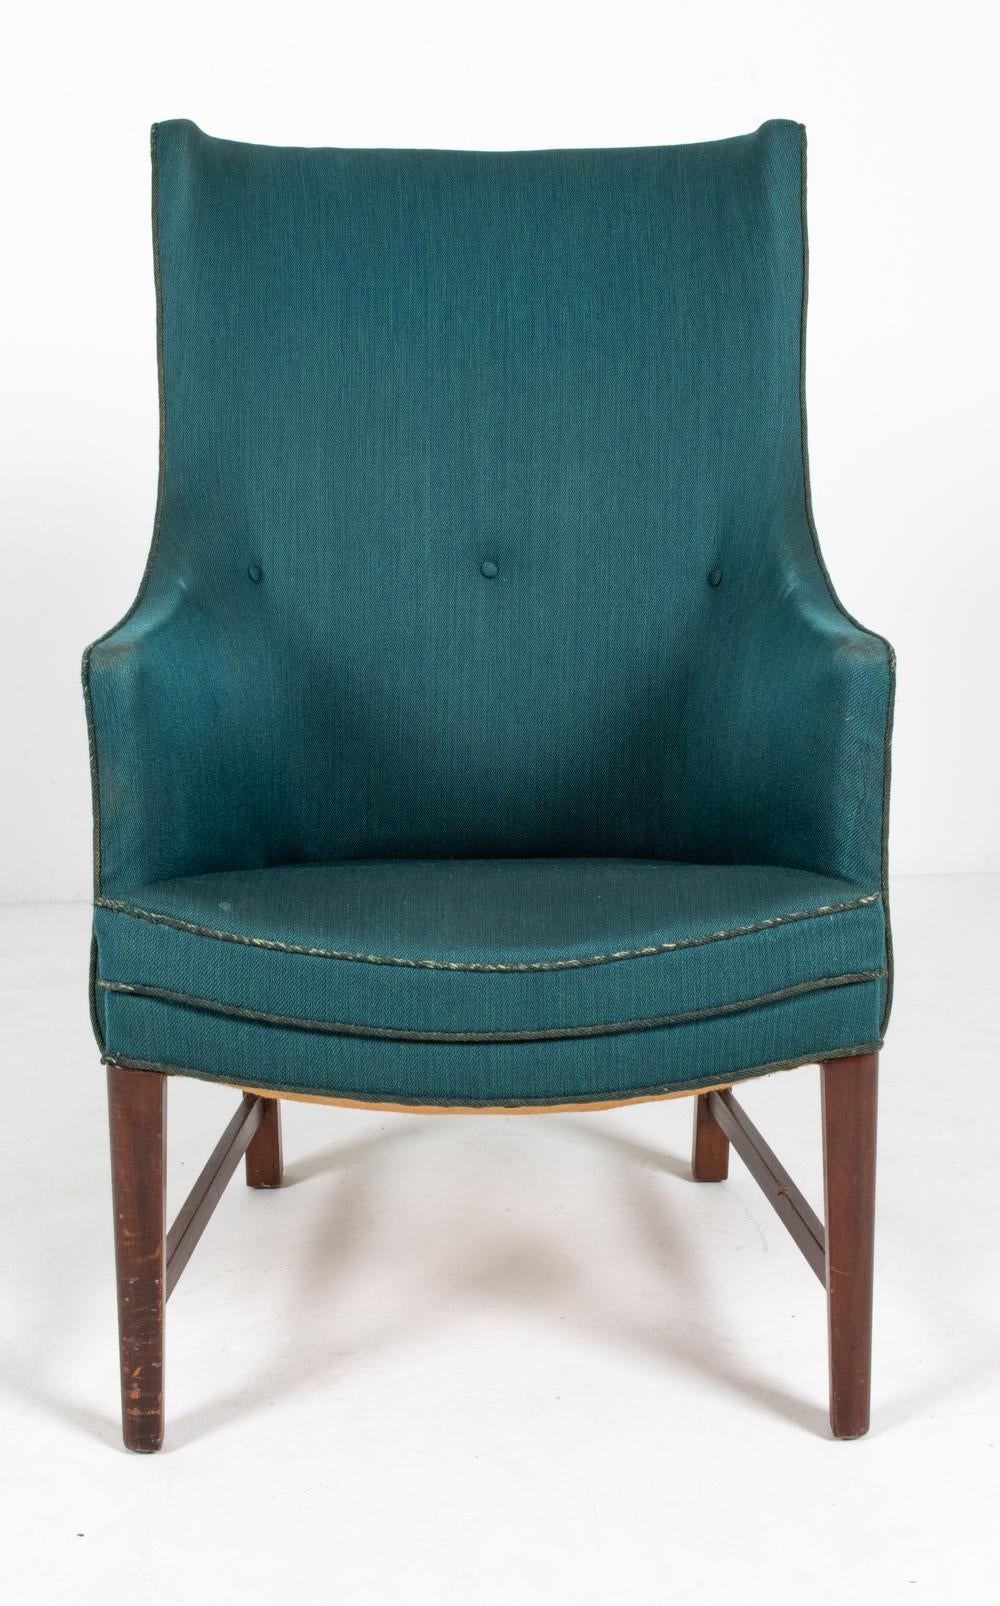 Frits Henningsen Danish Highback Lounge Chair, c. 1940's For Sale 2